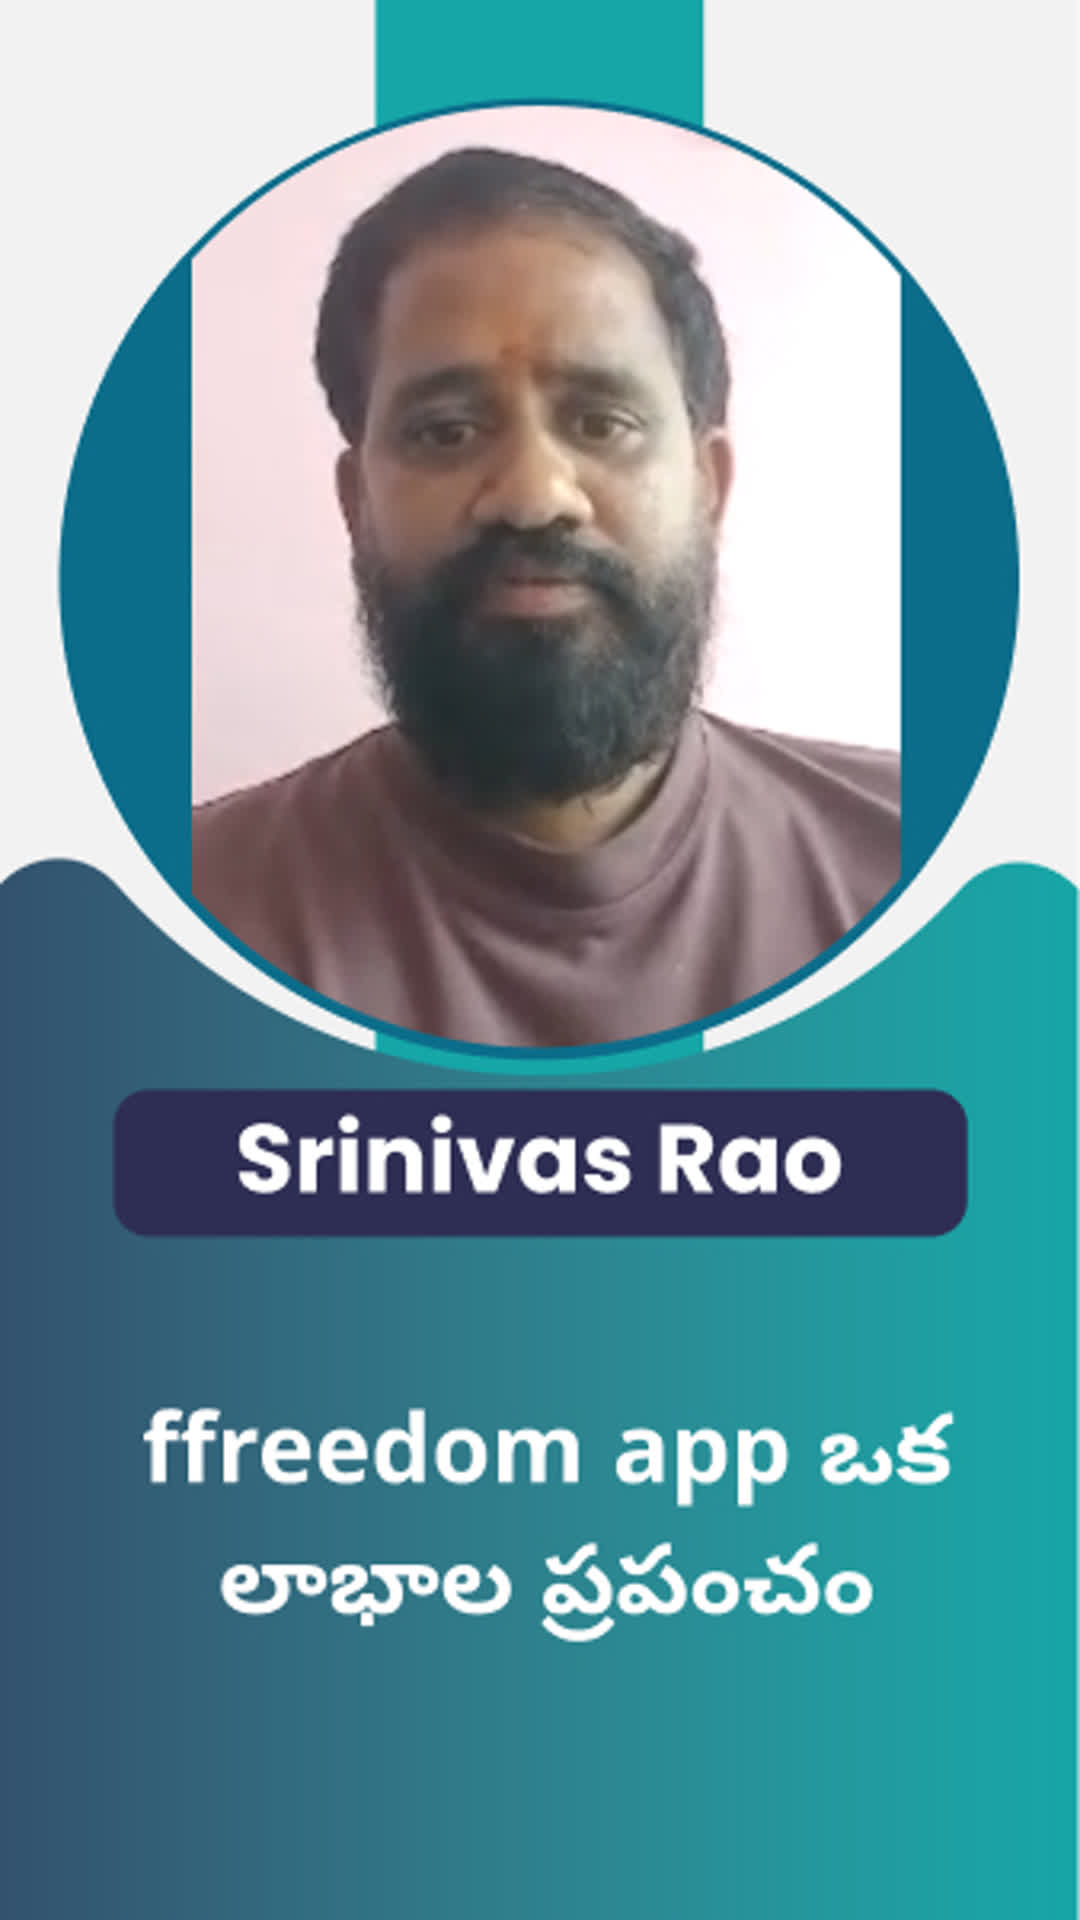 Srinivasa Rao's Honest Review of ffreedom app - Vizianagaram ,Andhra Pradesh